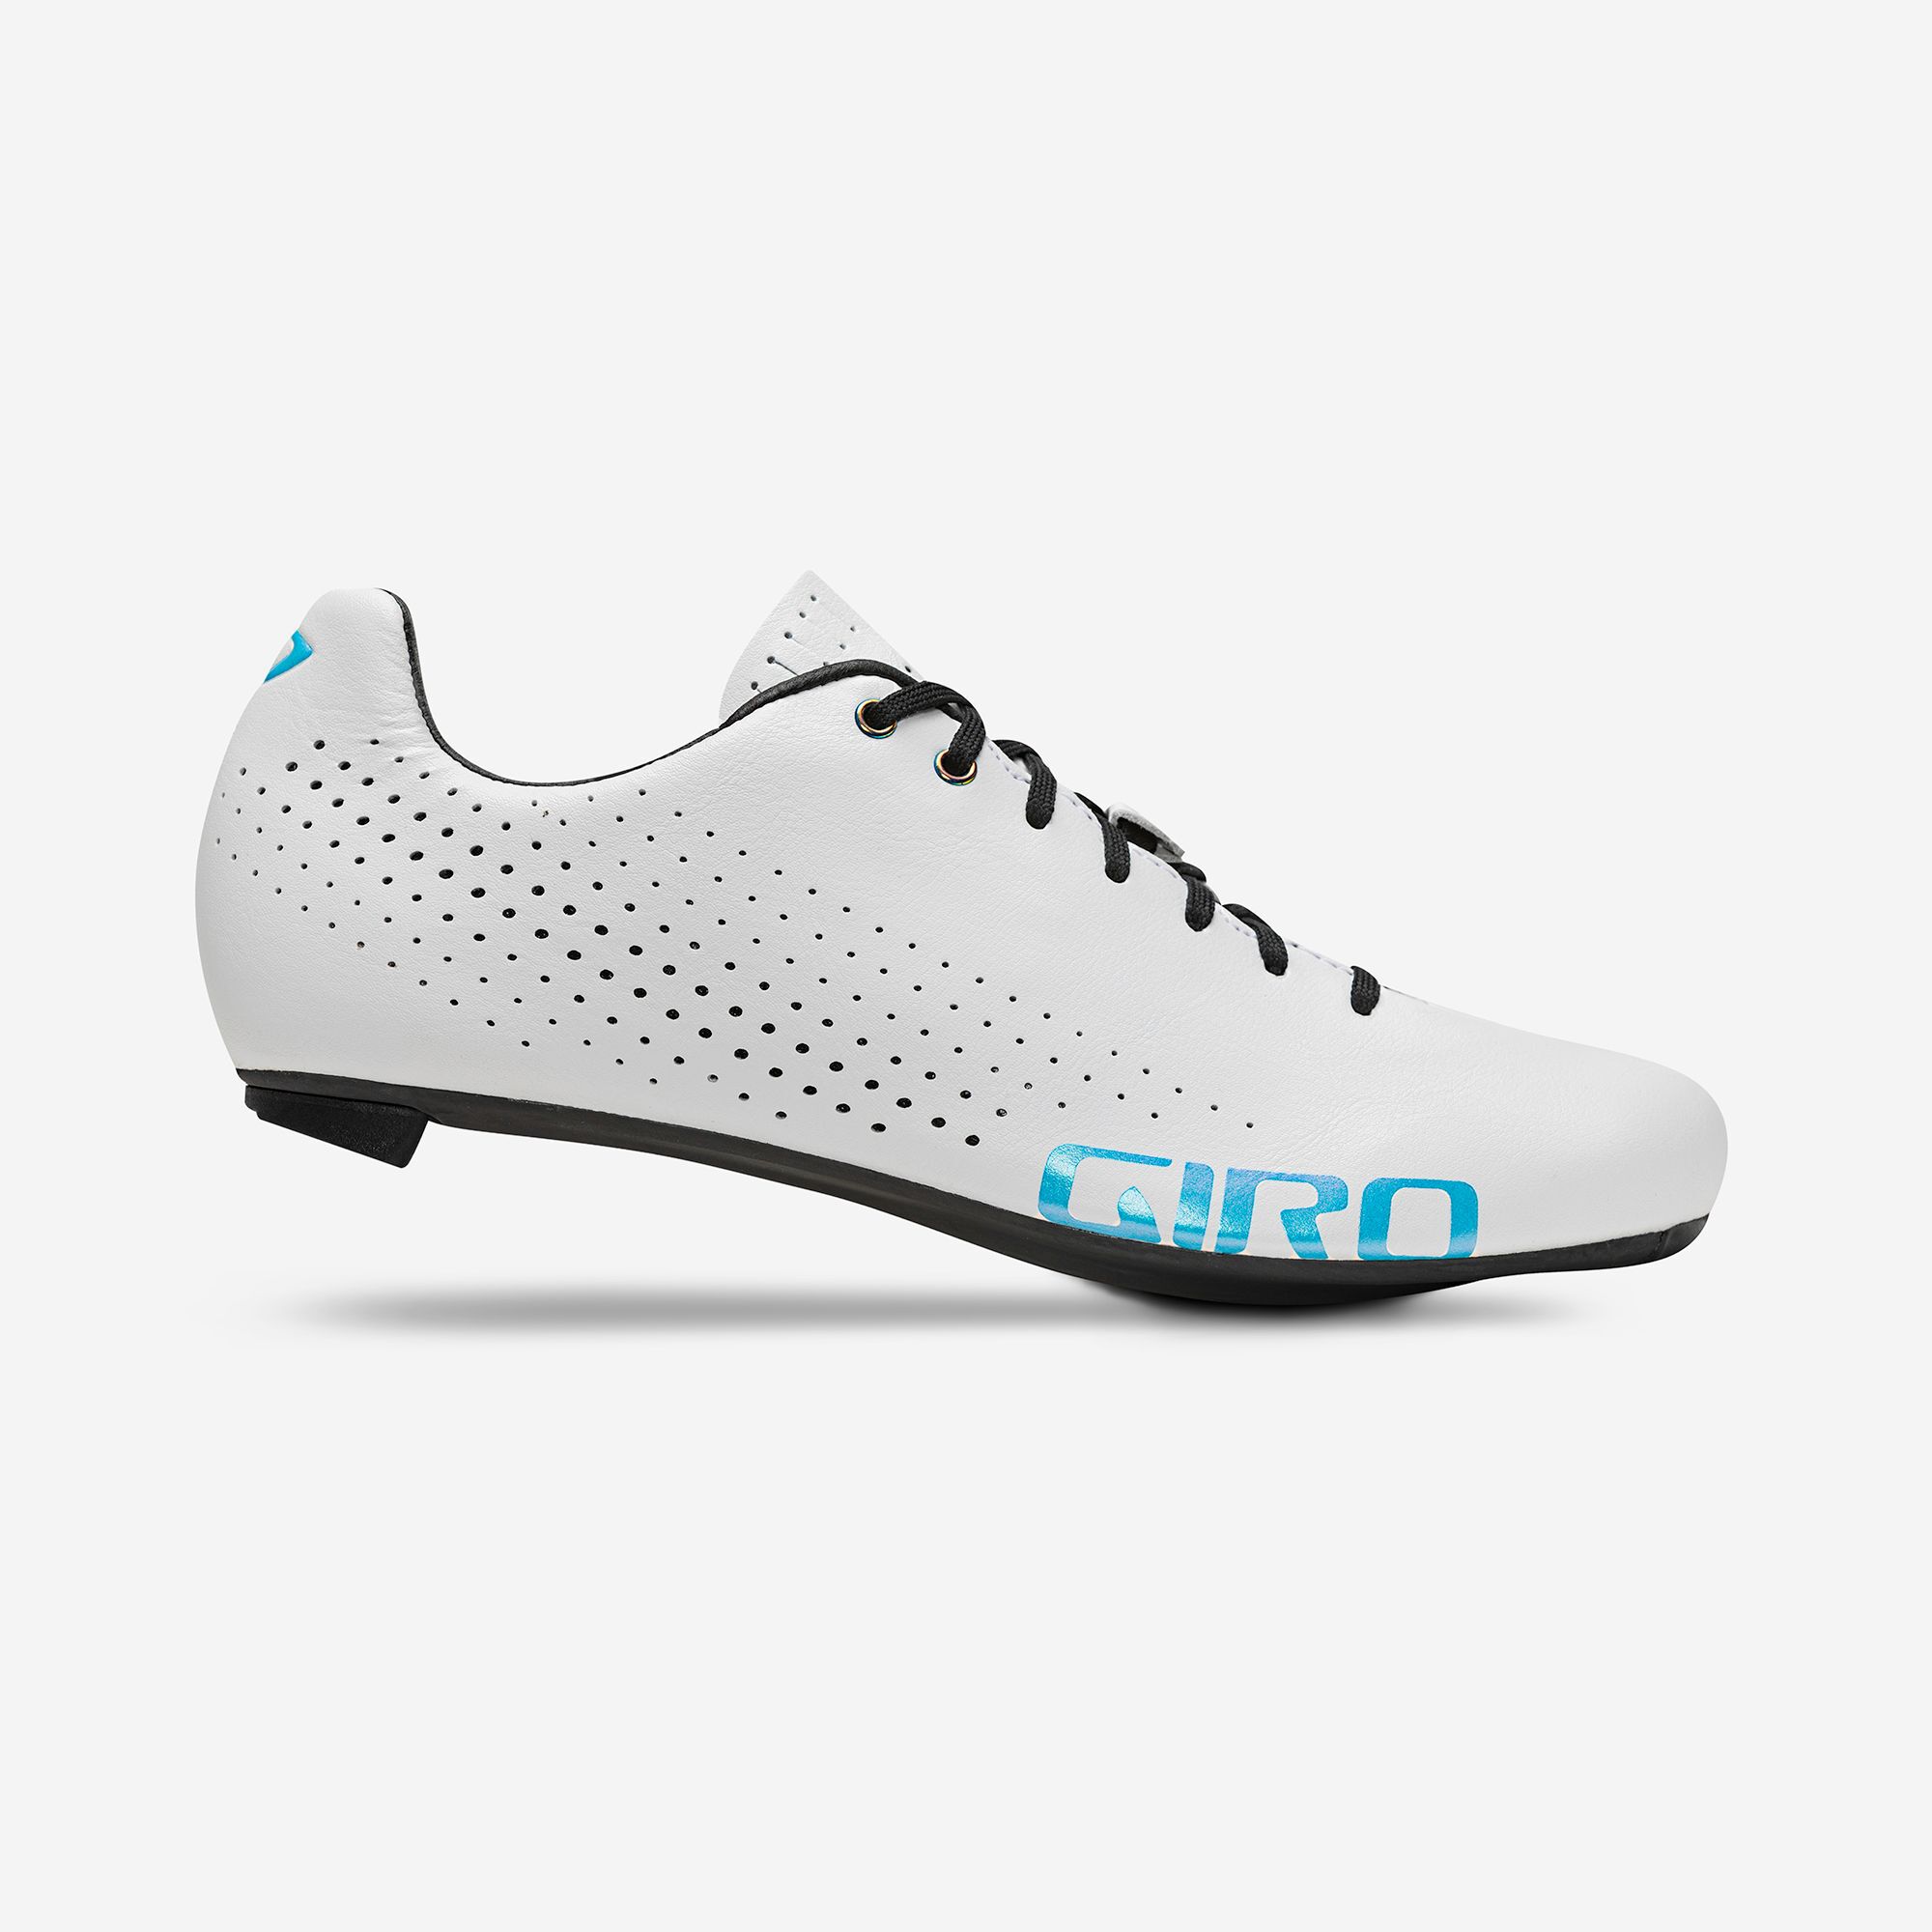 Empire W Shoe | Giro